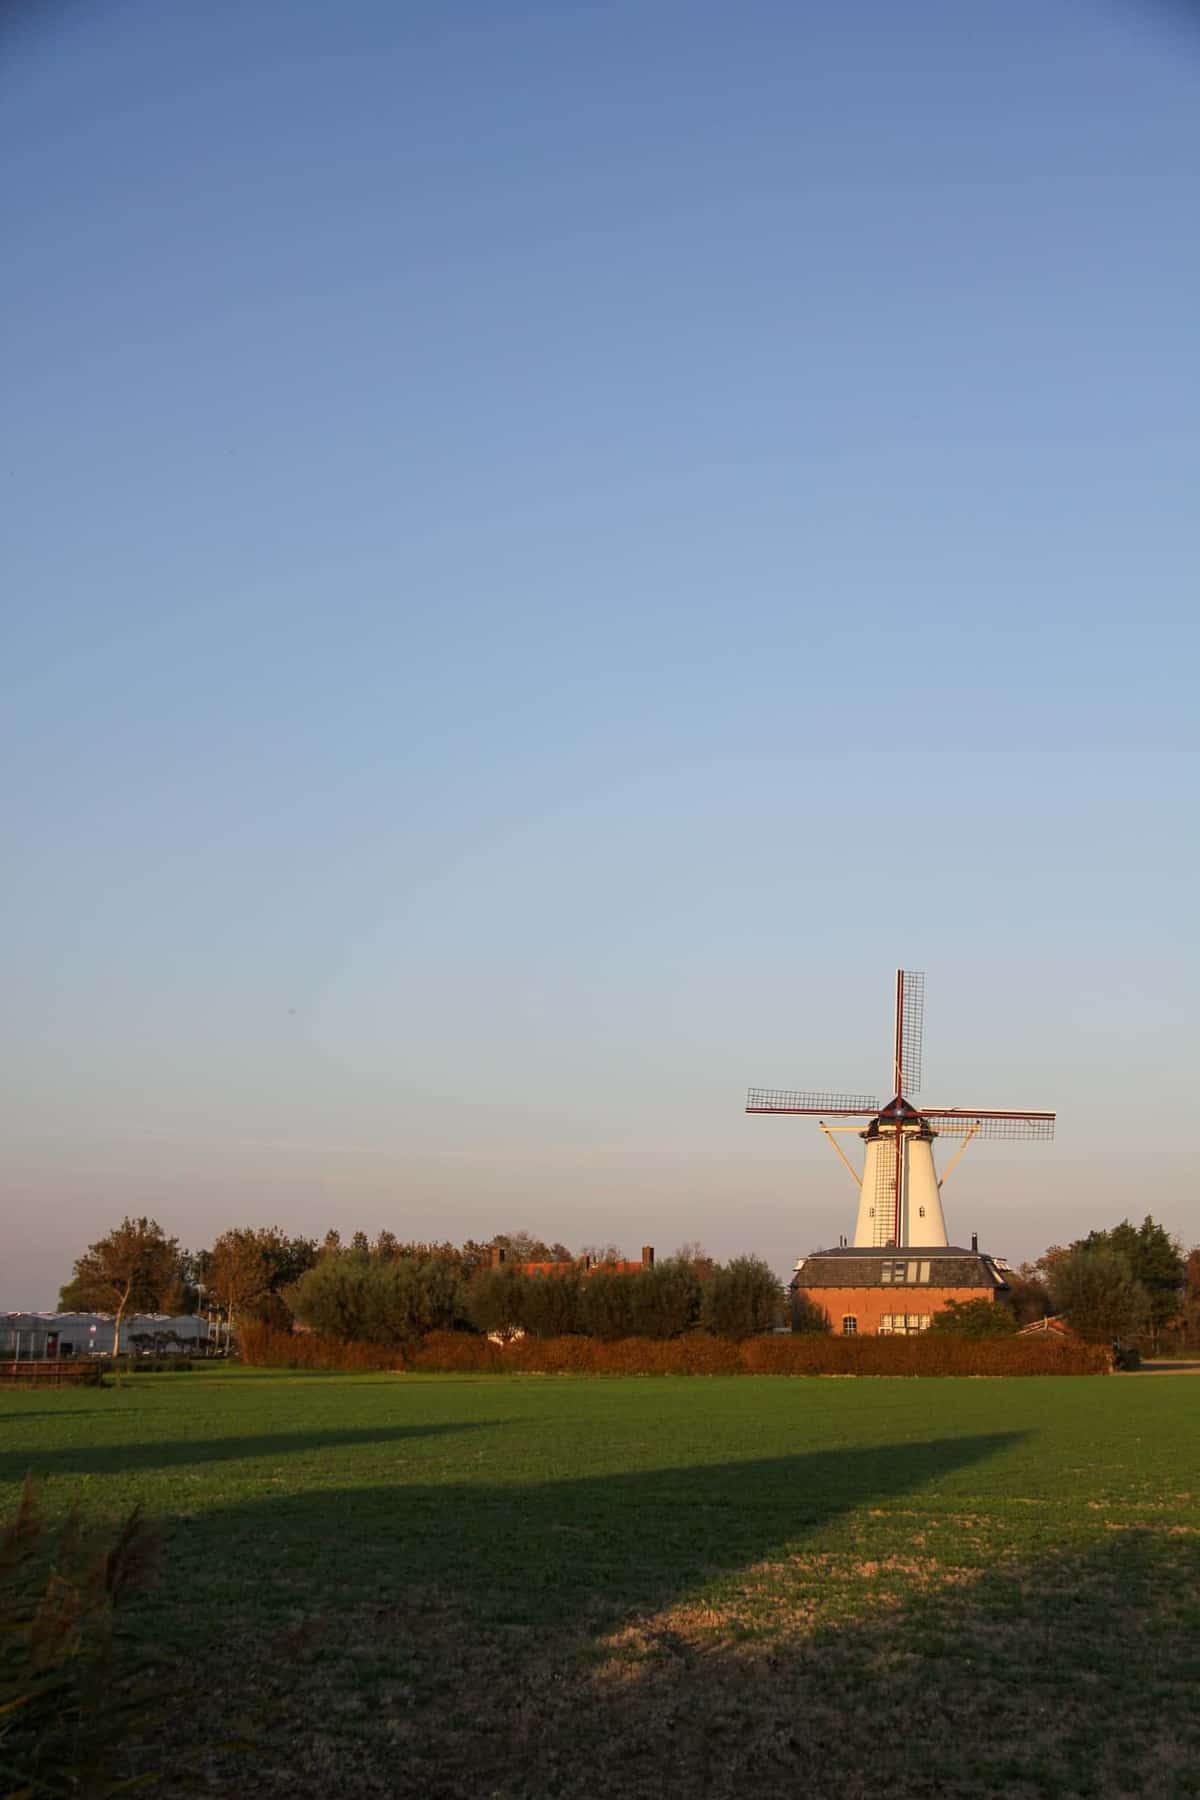 A windmill in Zeeland, the Netherlands.